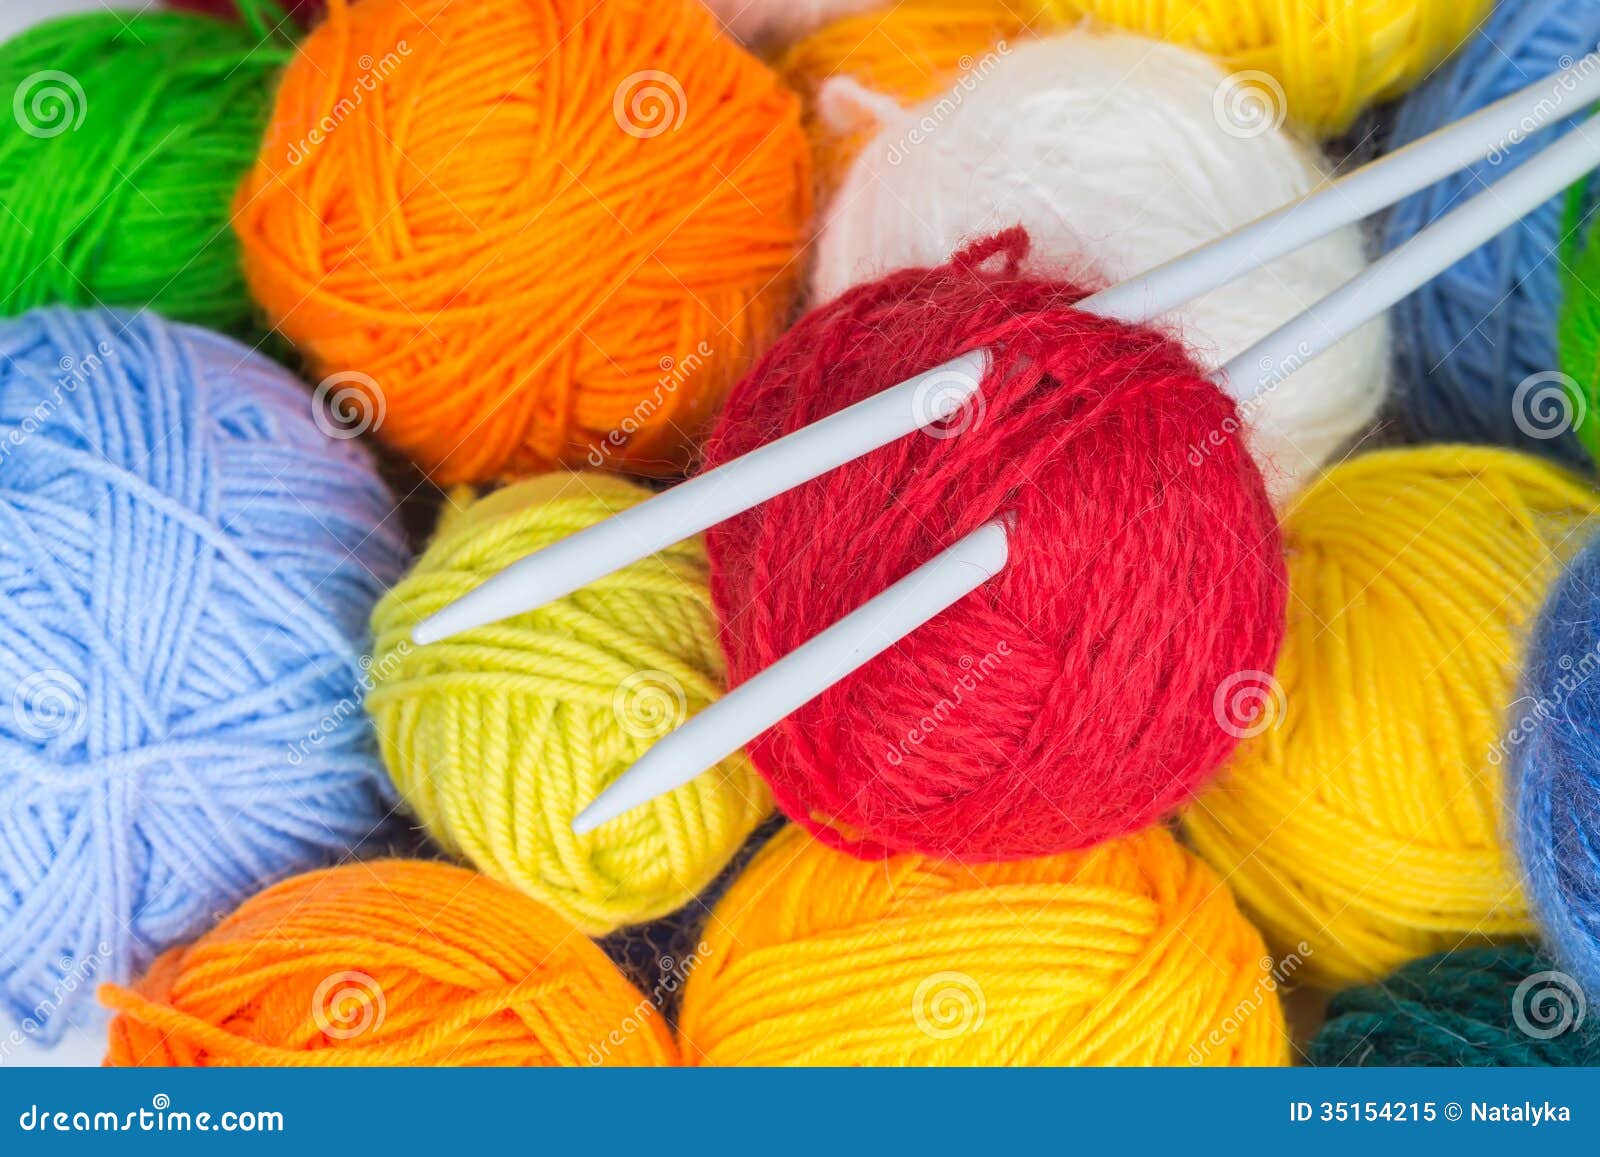 Balls Of Wool Yarn And Knitting Needles Stock Photo 35154215